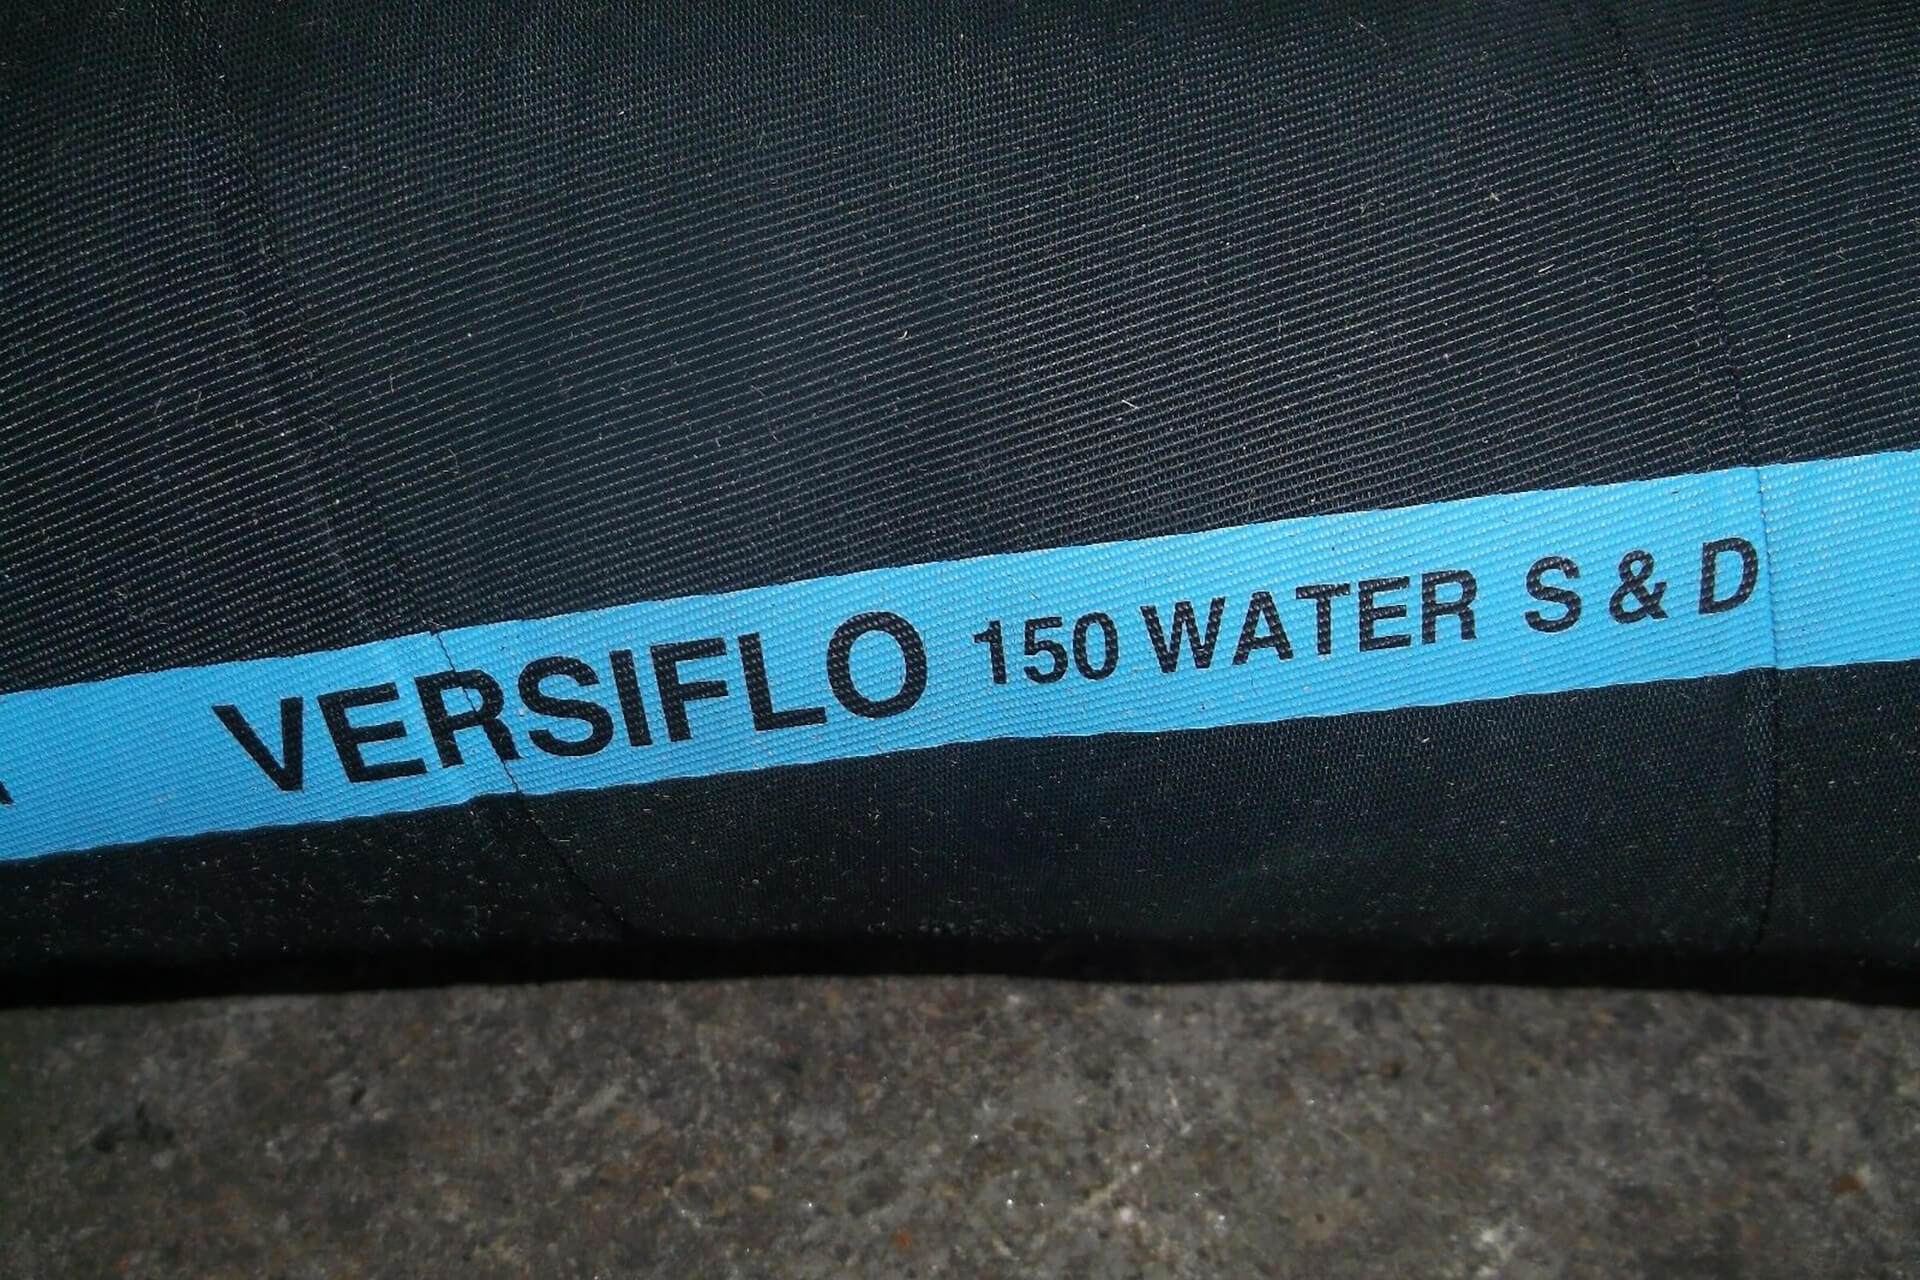 Versiflo Water S&D Hoses